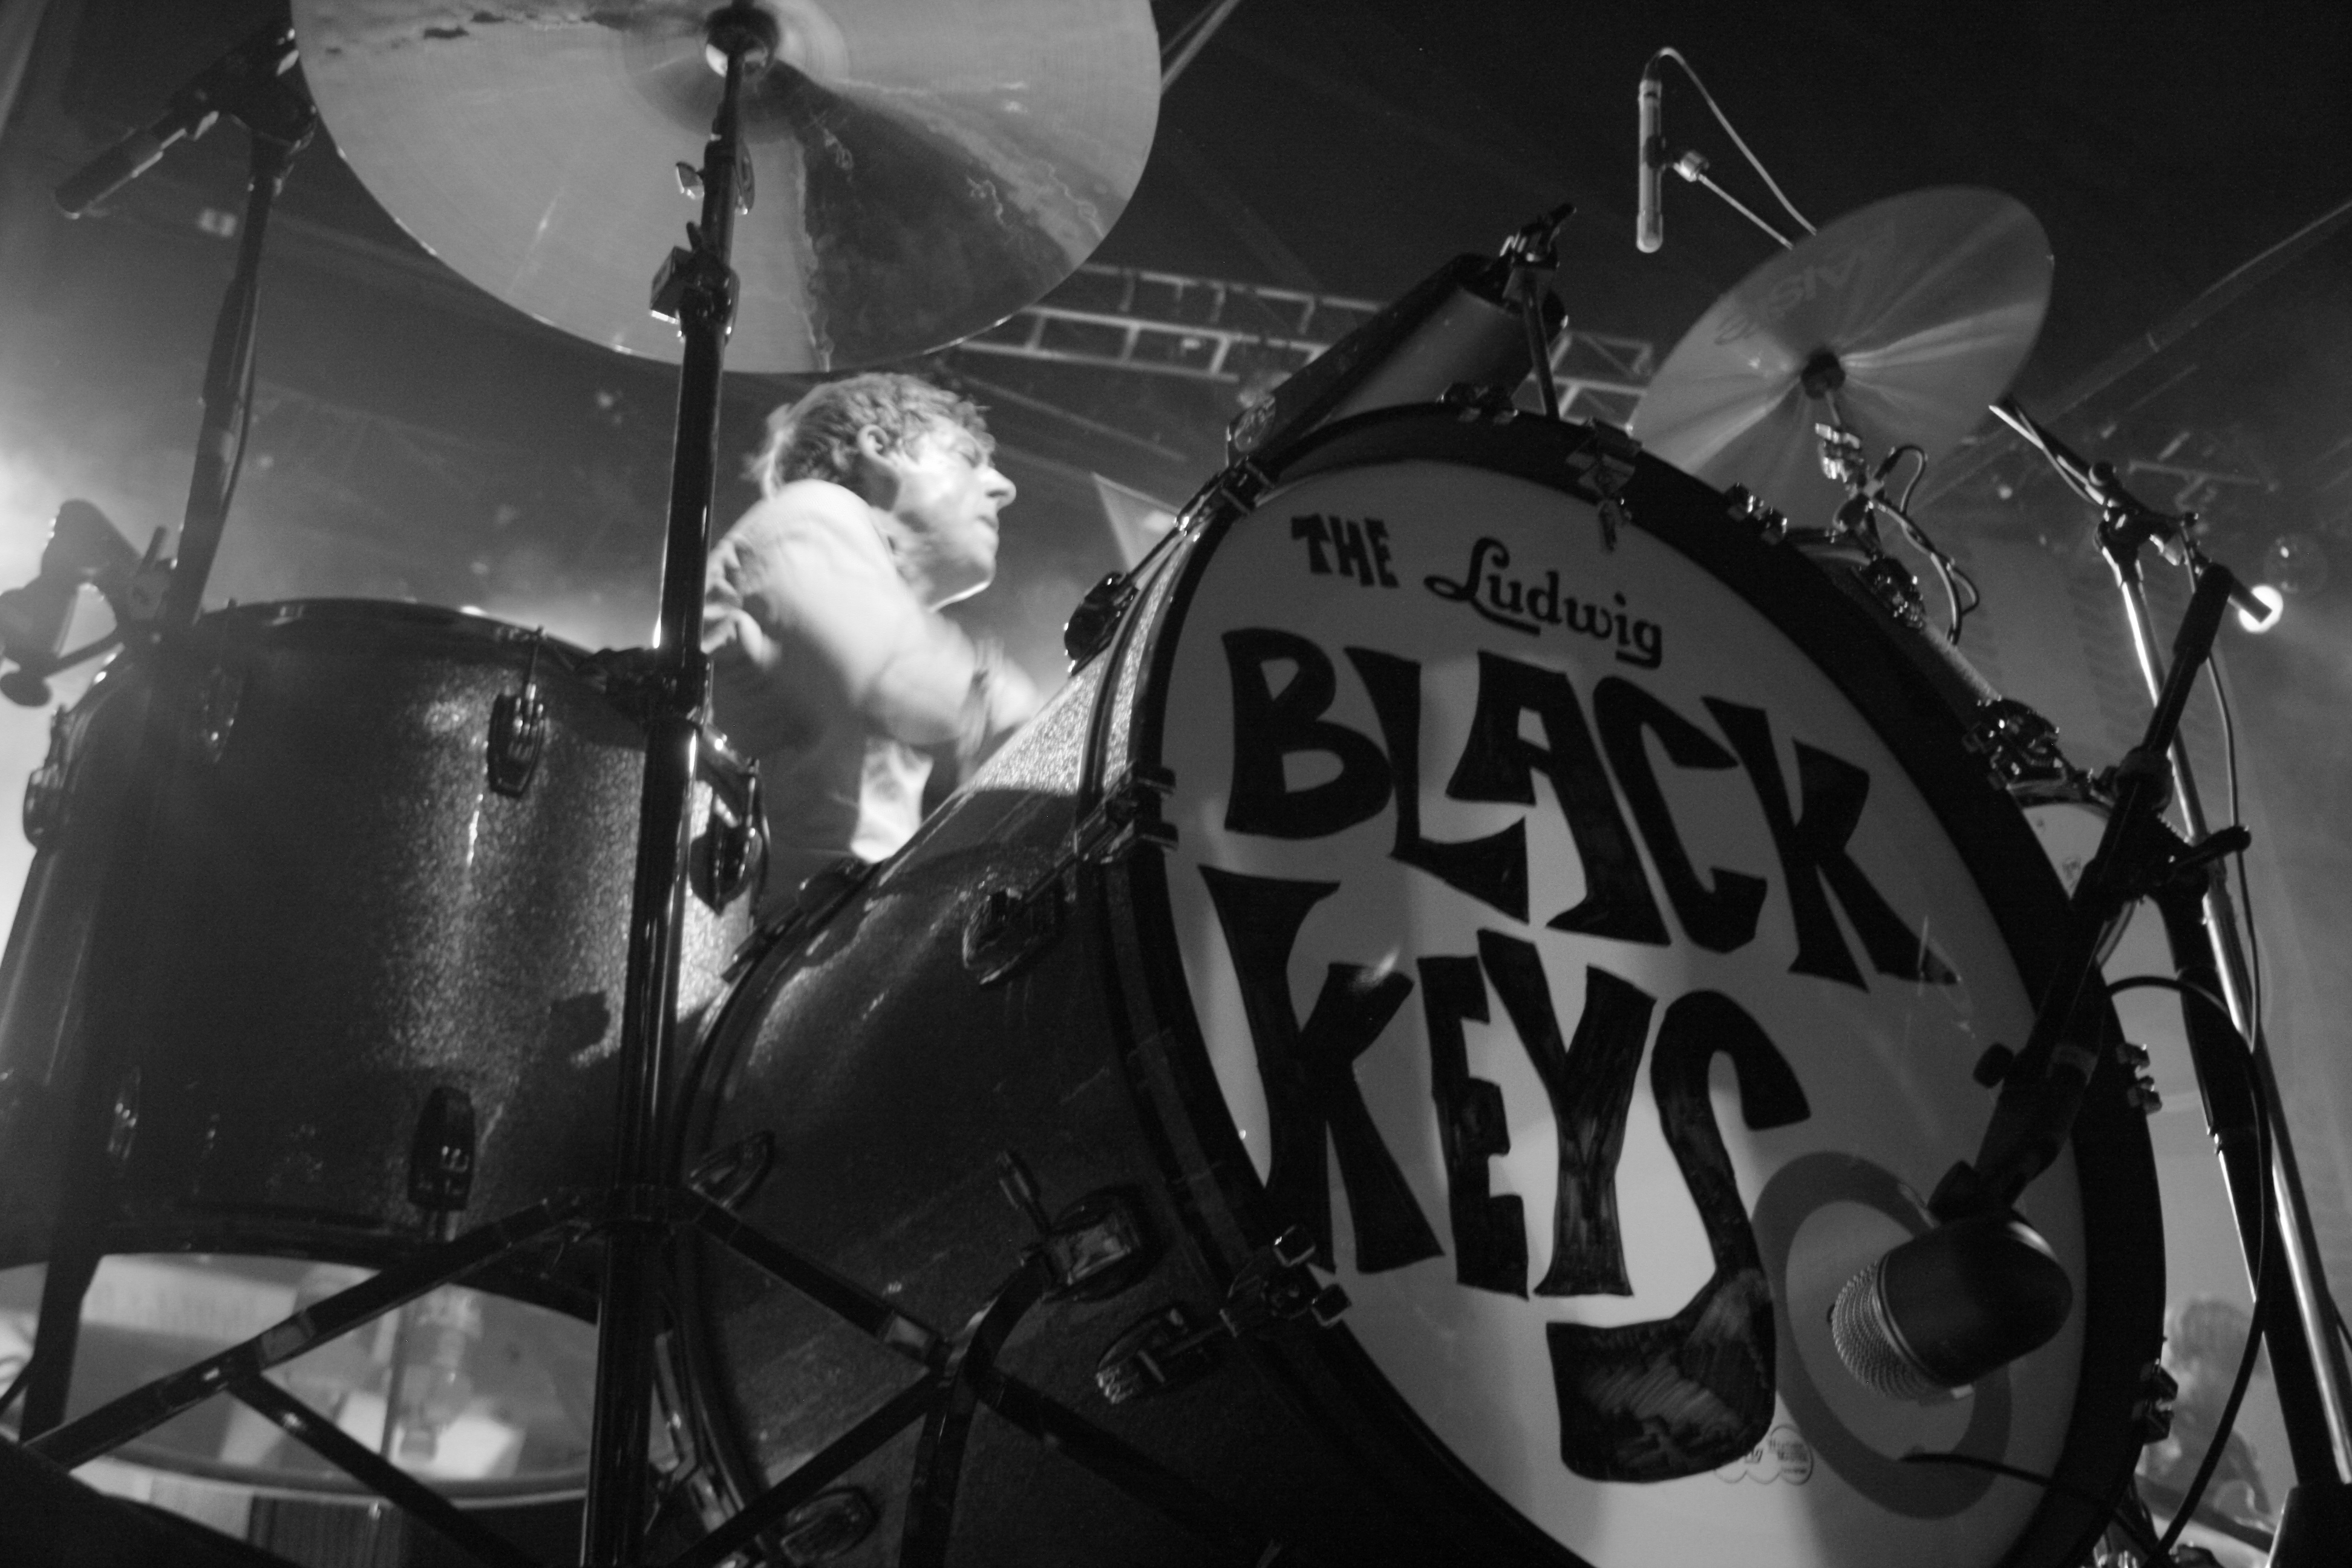 Black Keys Background De show van the black keys is